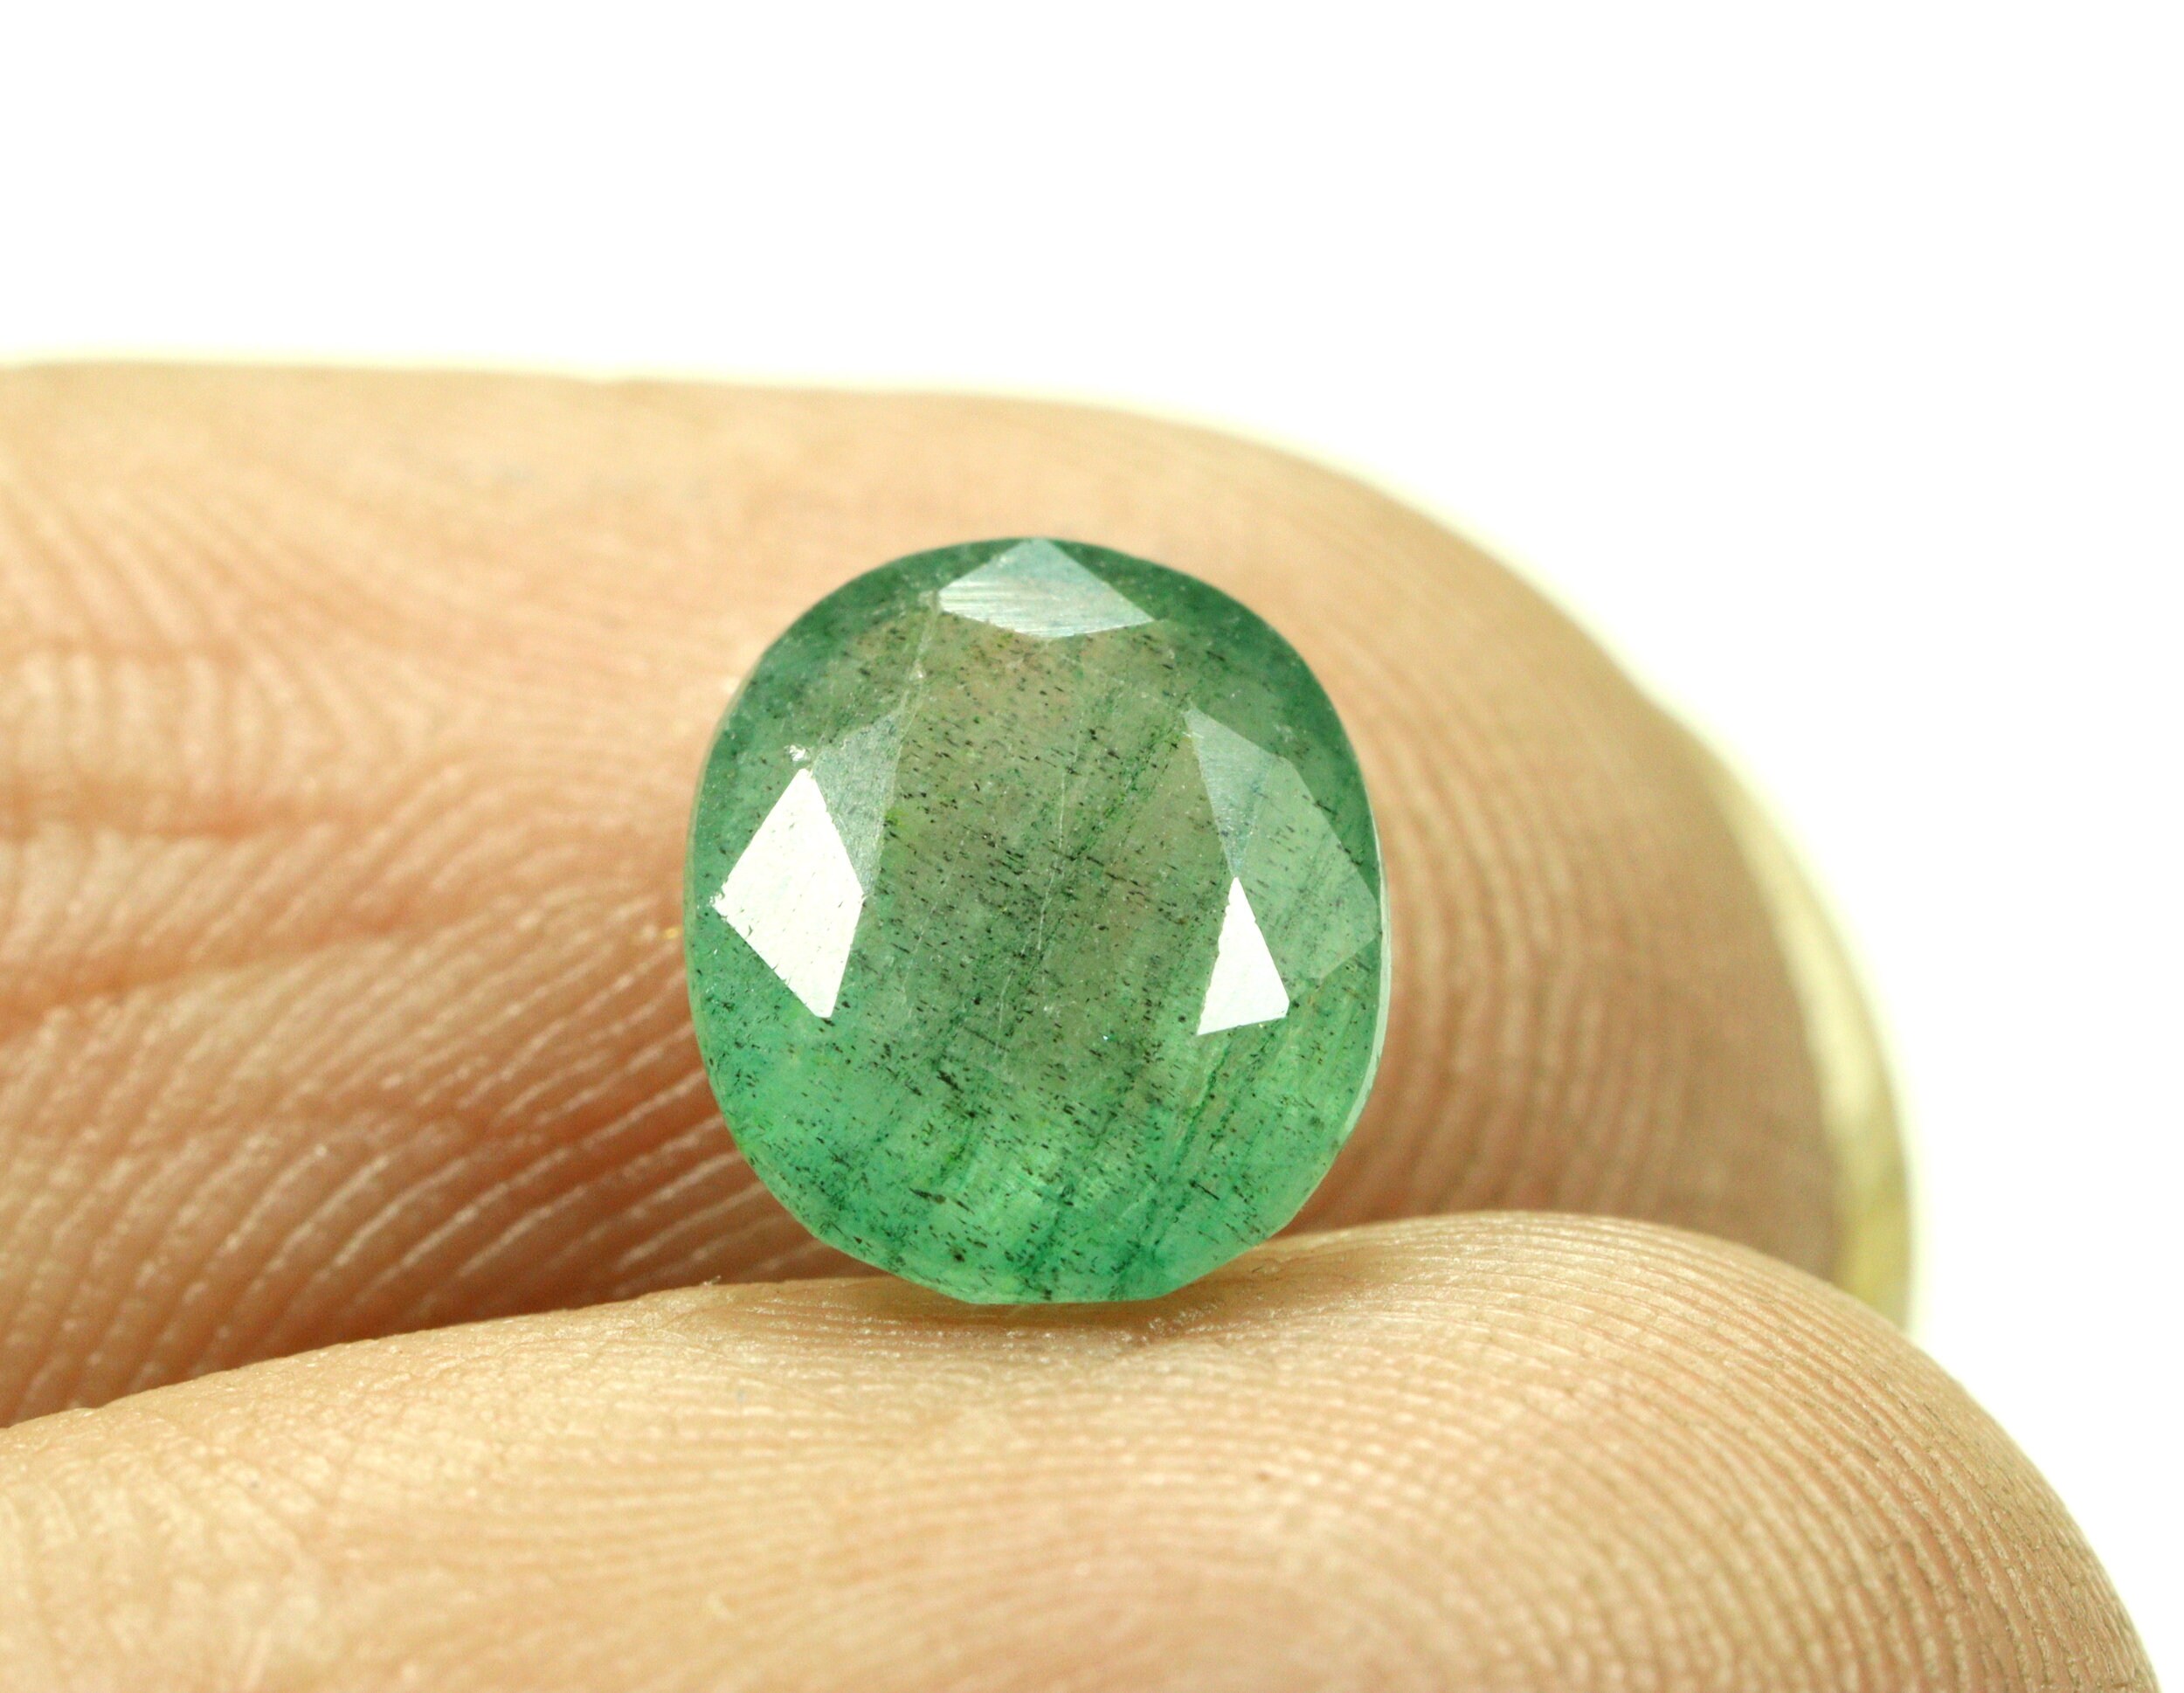 27.10 Ct Beryl Emerald Faceted Gemstone Oval Shape Loose Gemstone 26x19x8 MM Pendant Size Emerald Gemstone